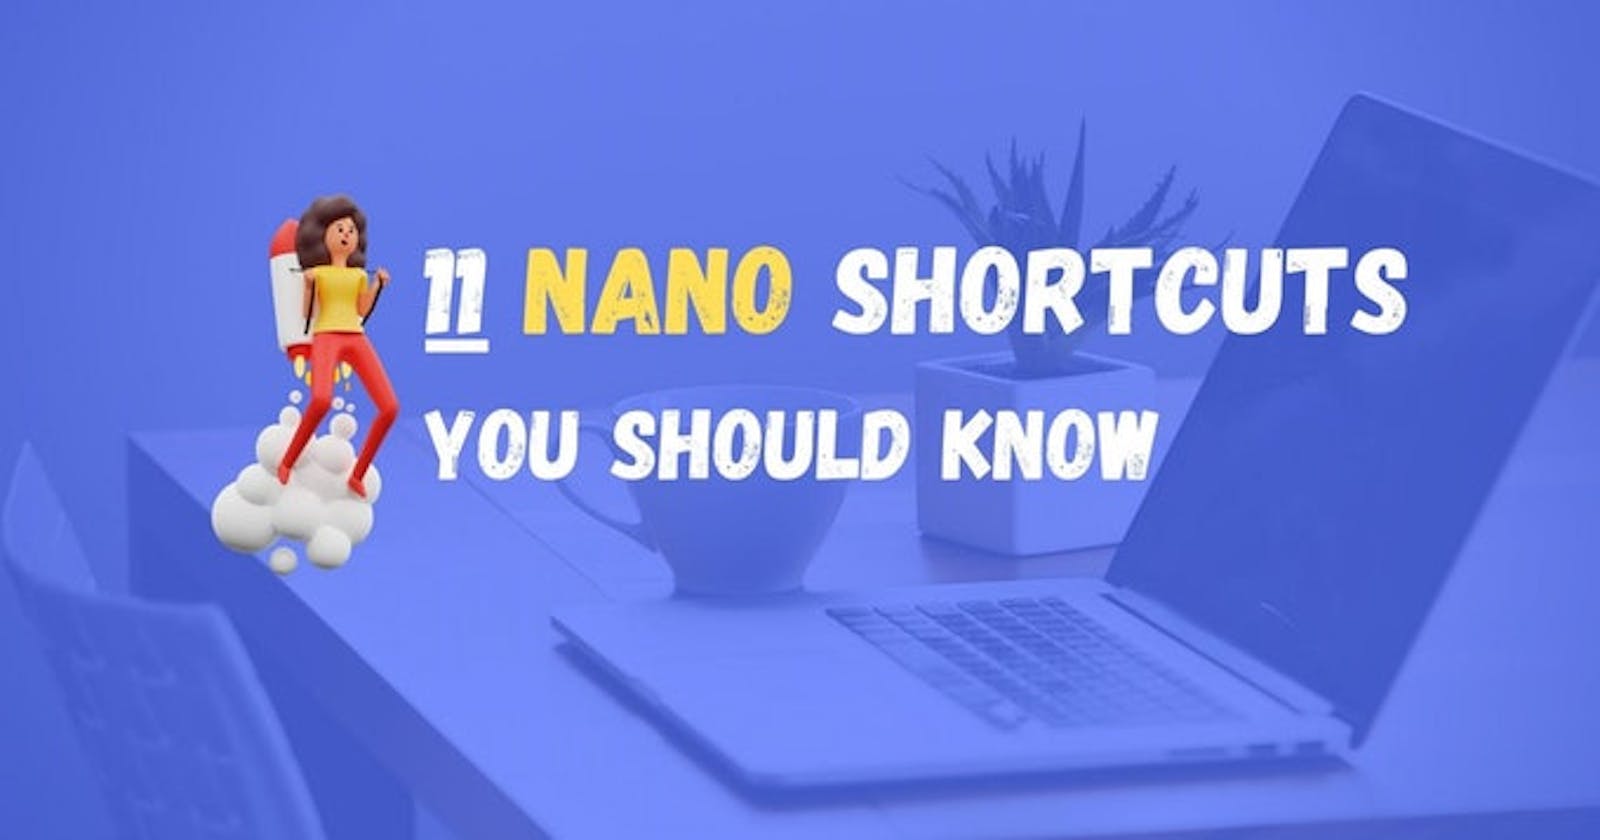 11 Nano shortcuts that you should know